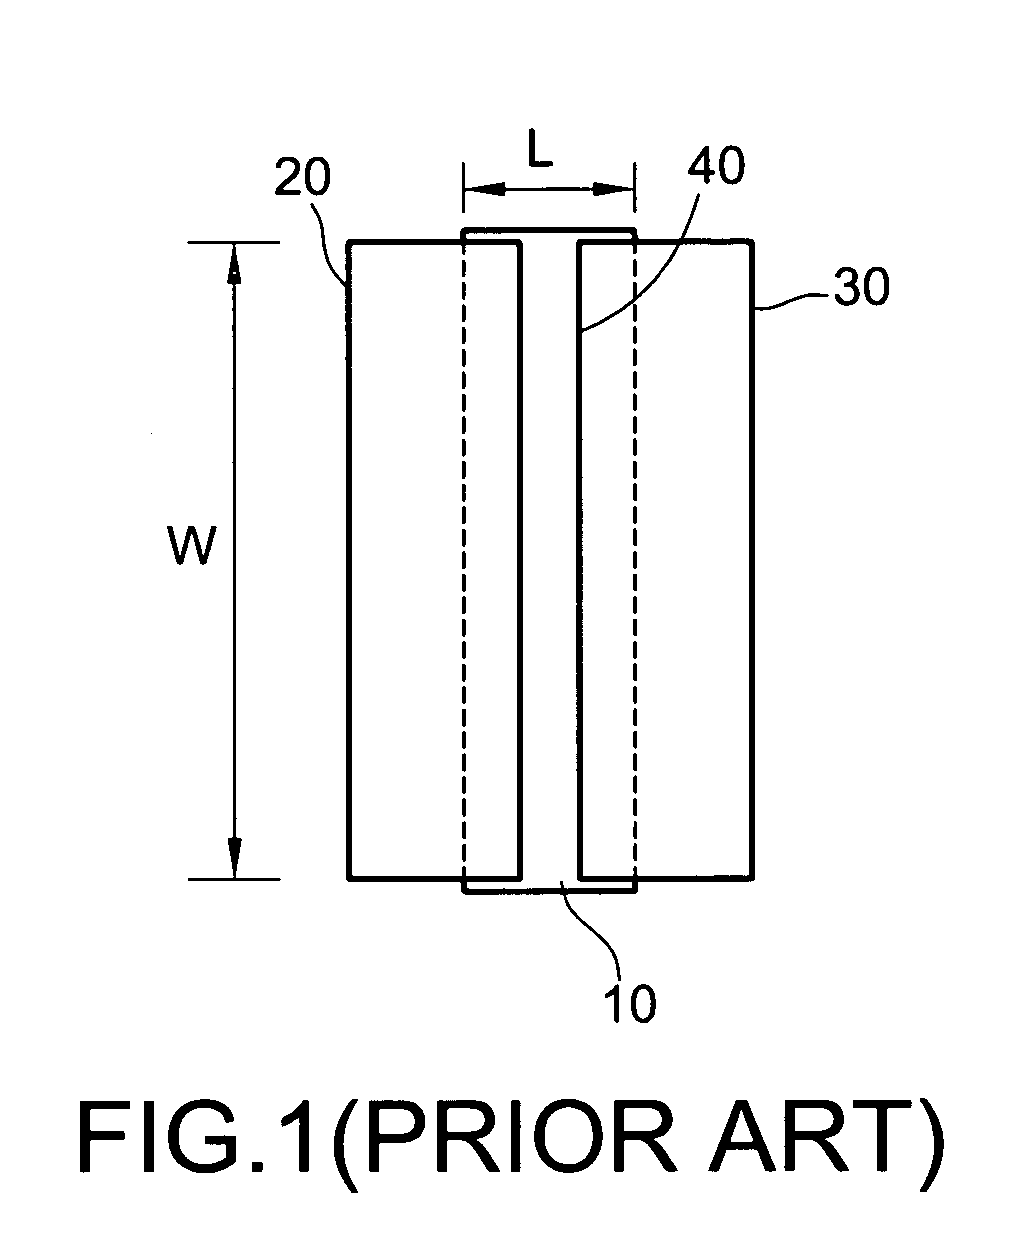 Thin-film transistor